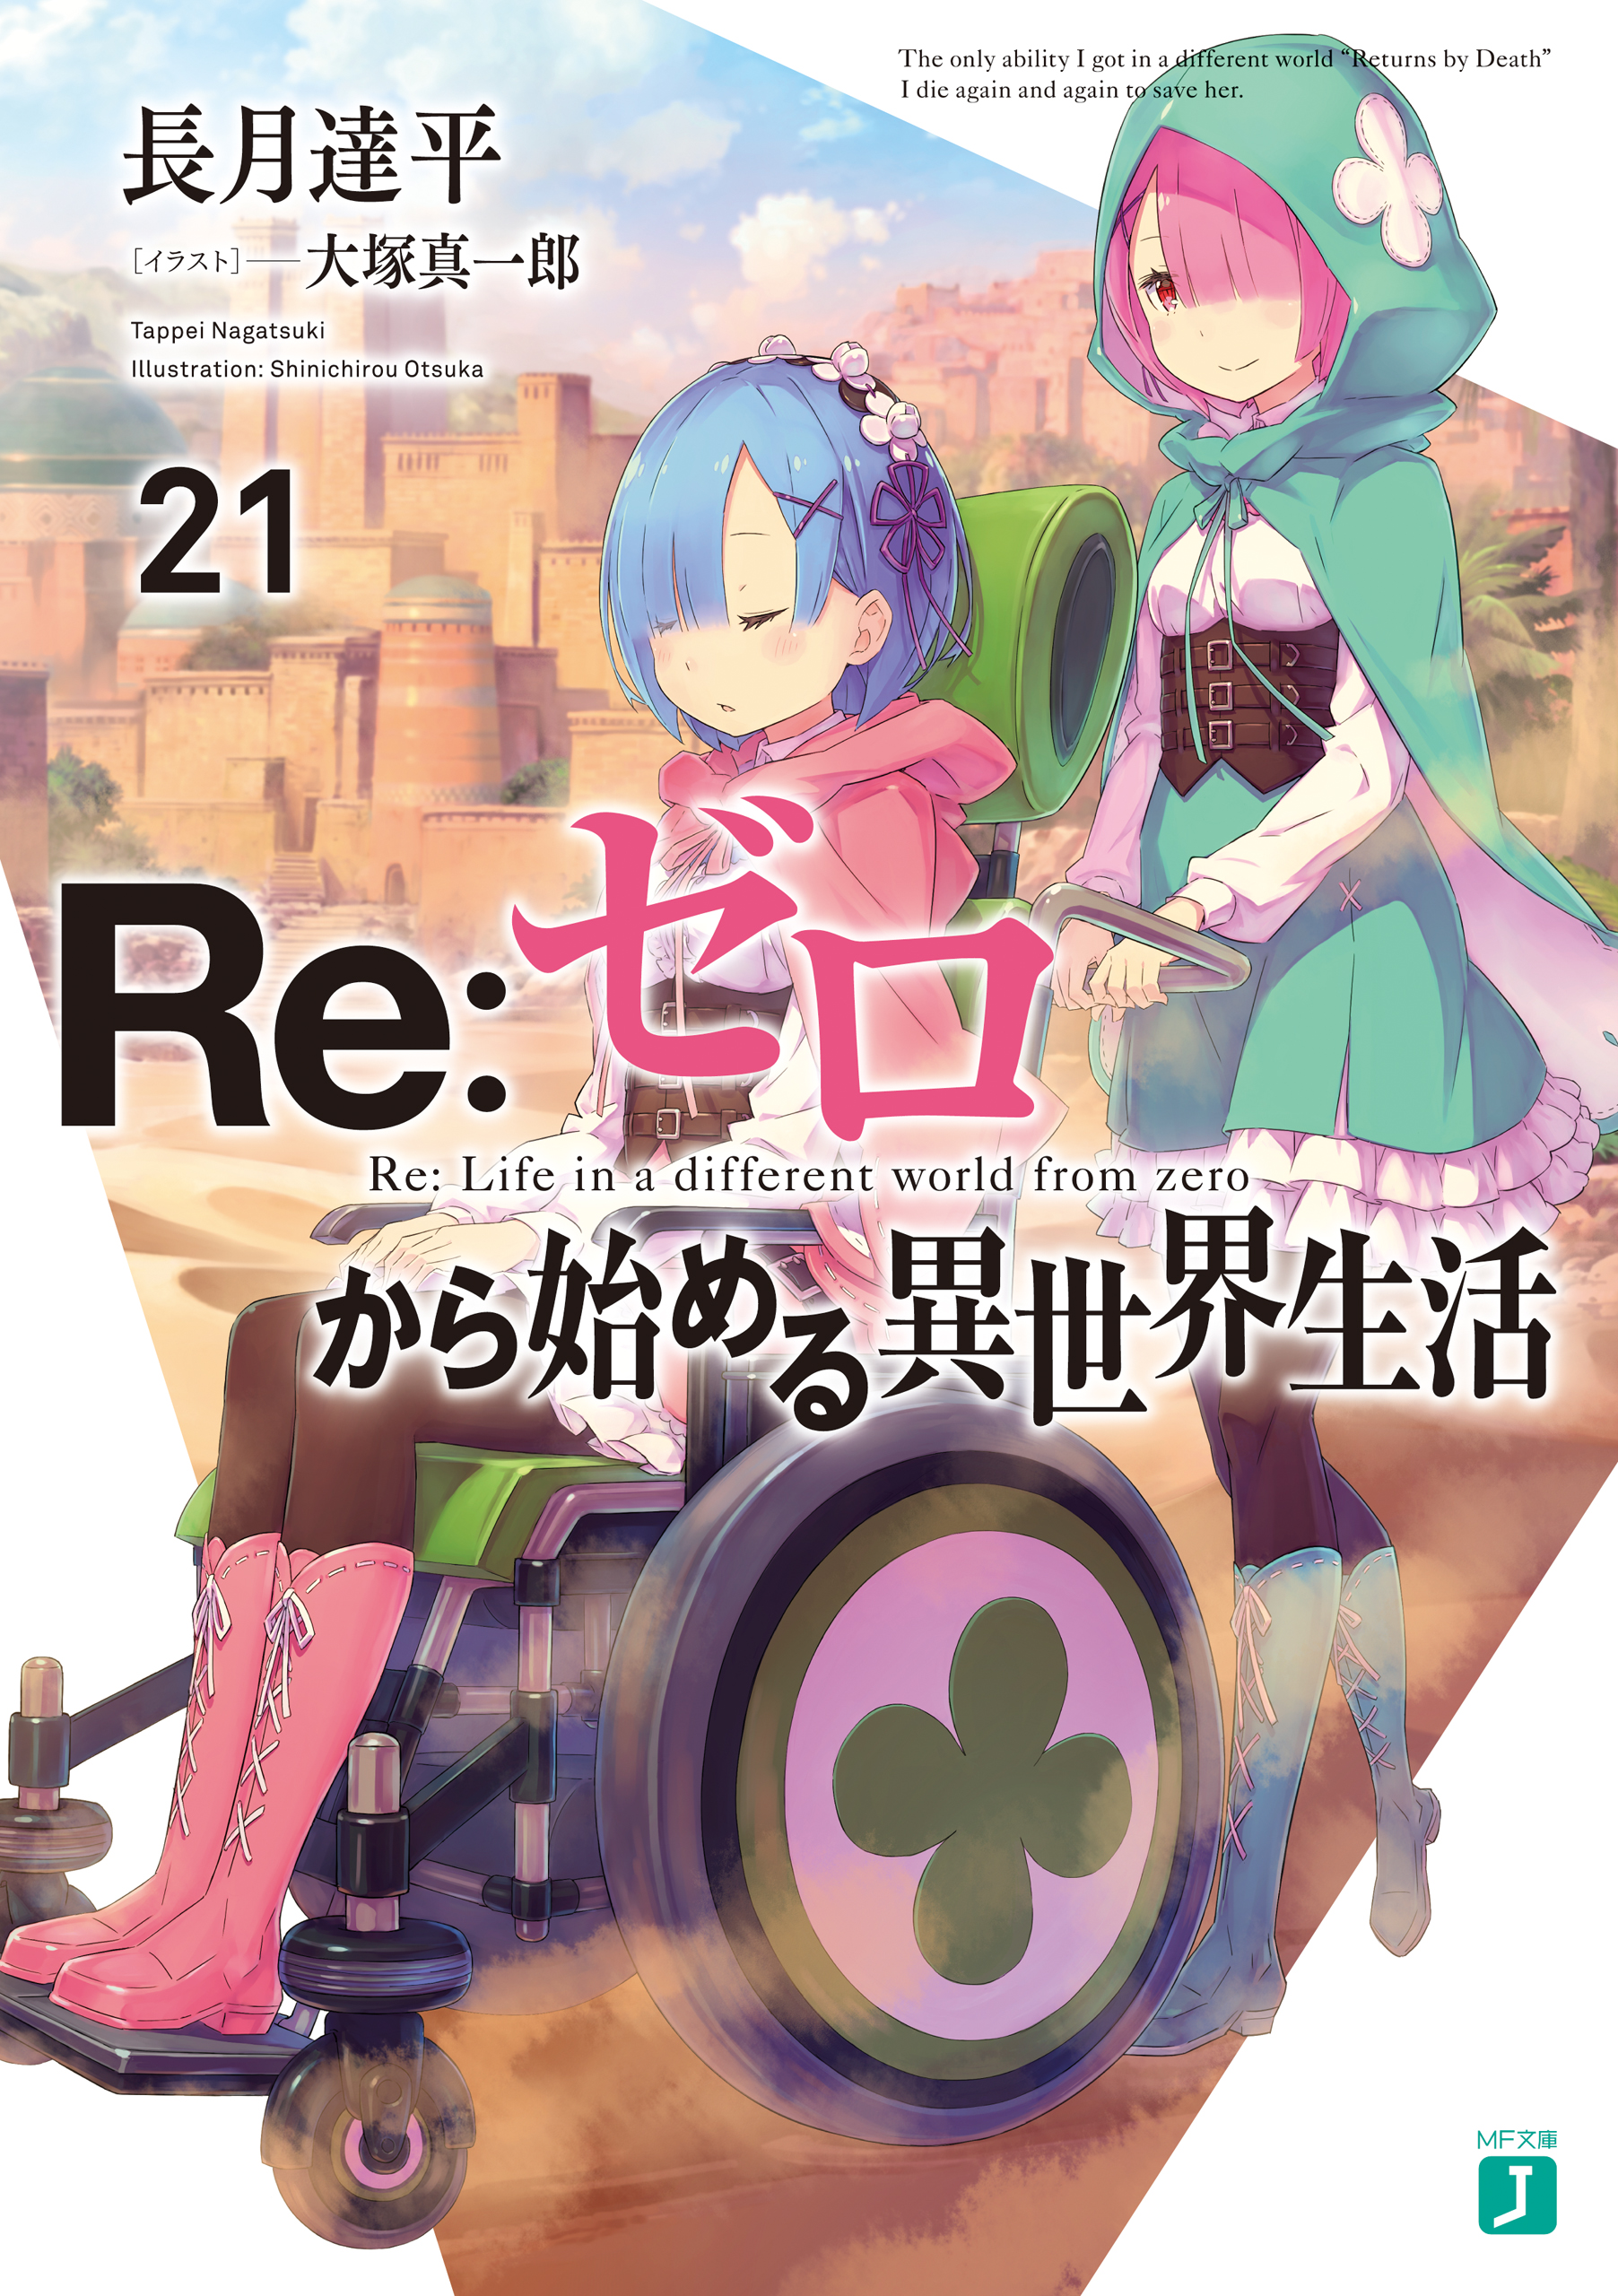 Re:Zero − Starting Life in Another World, Isekai Wiki